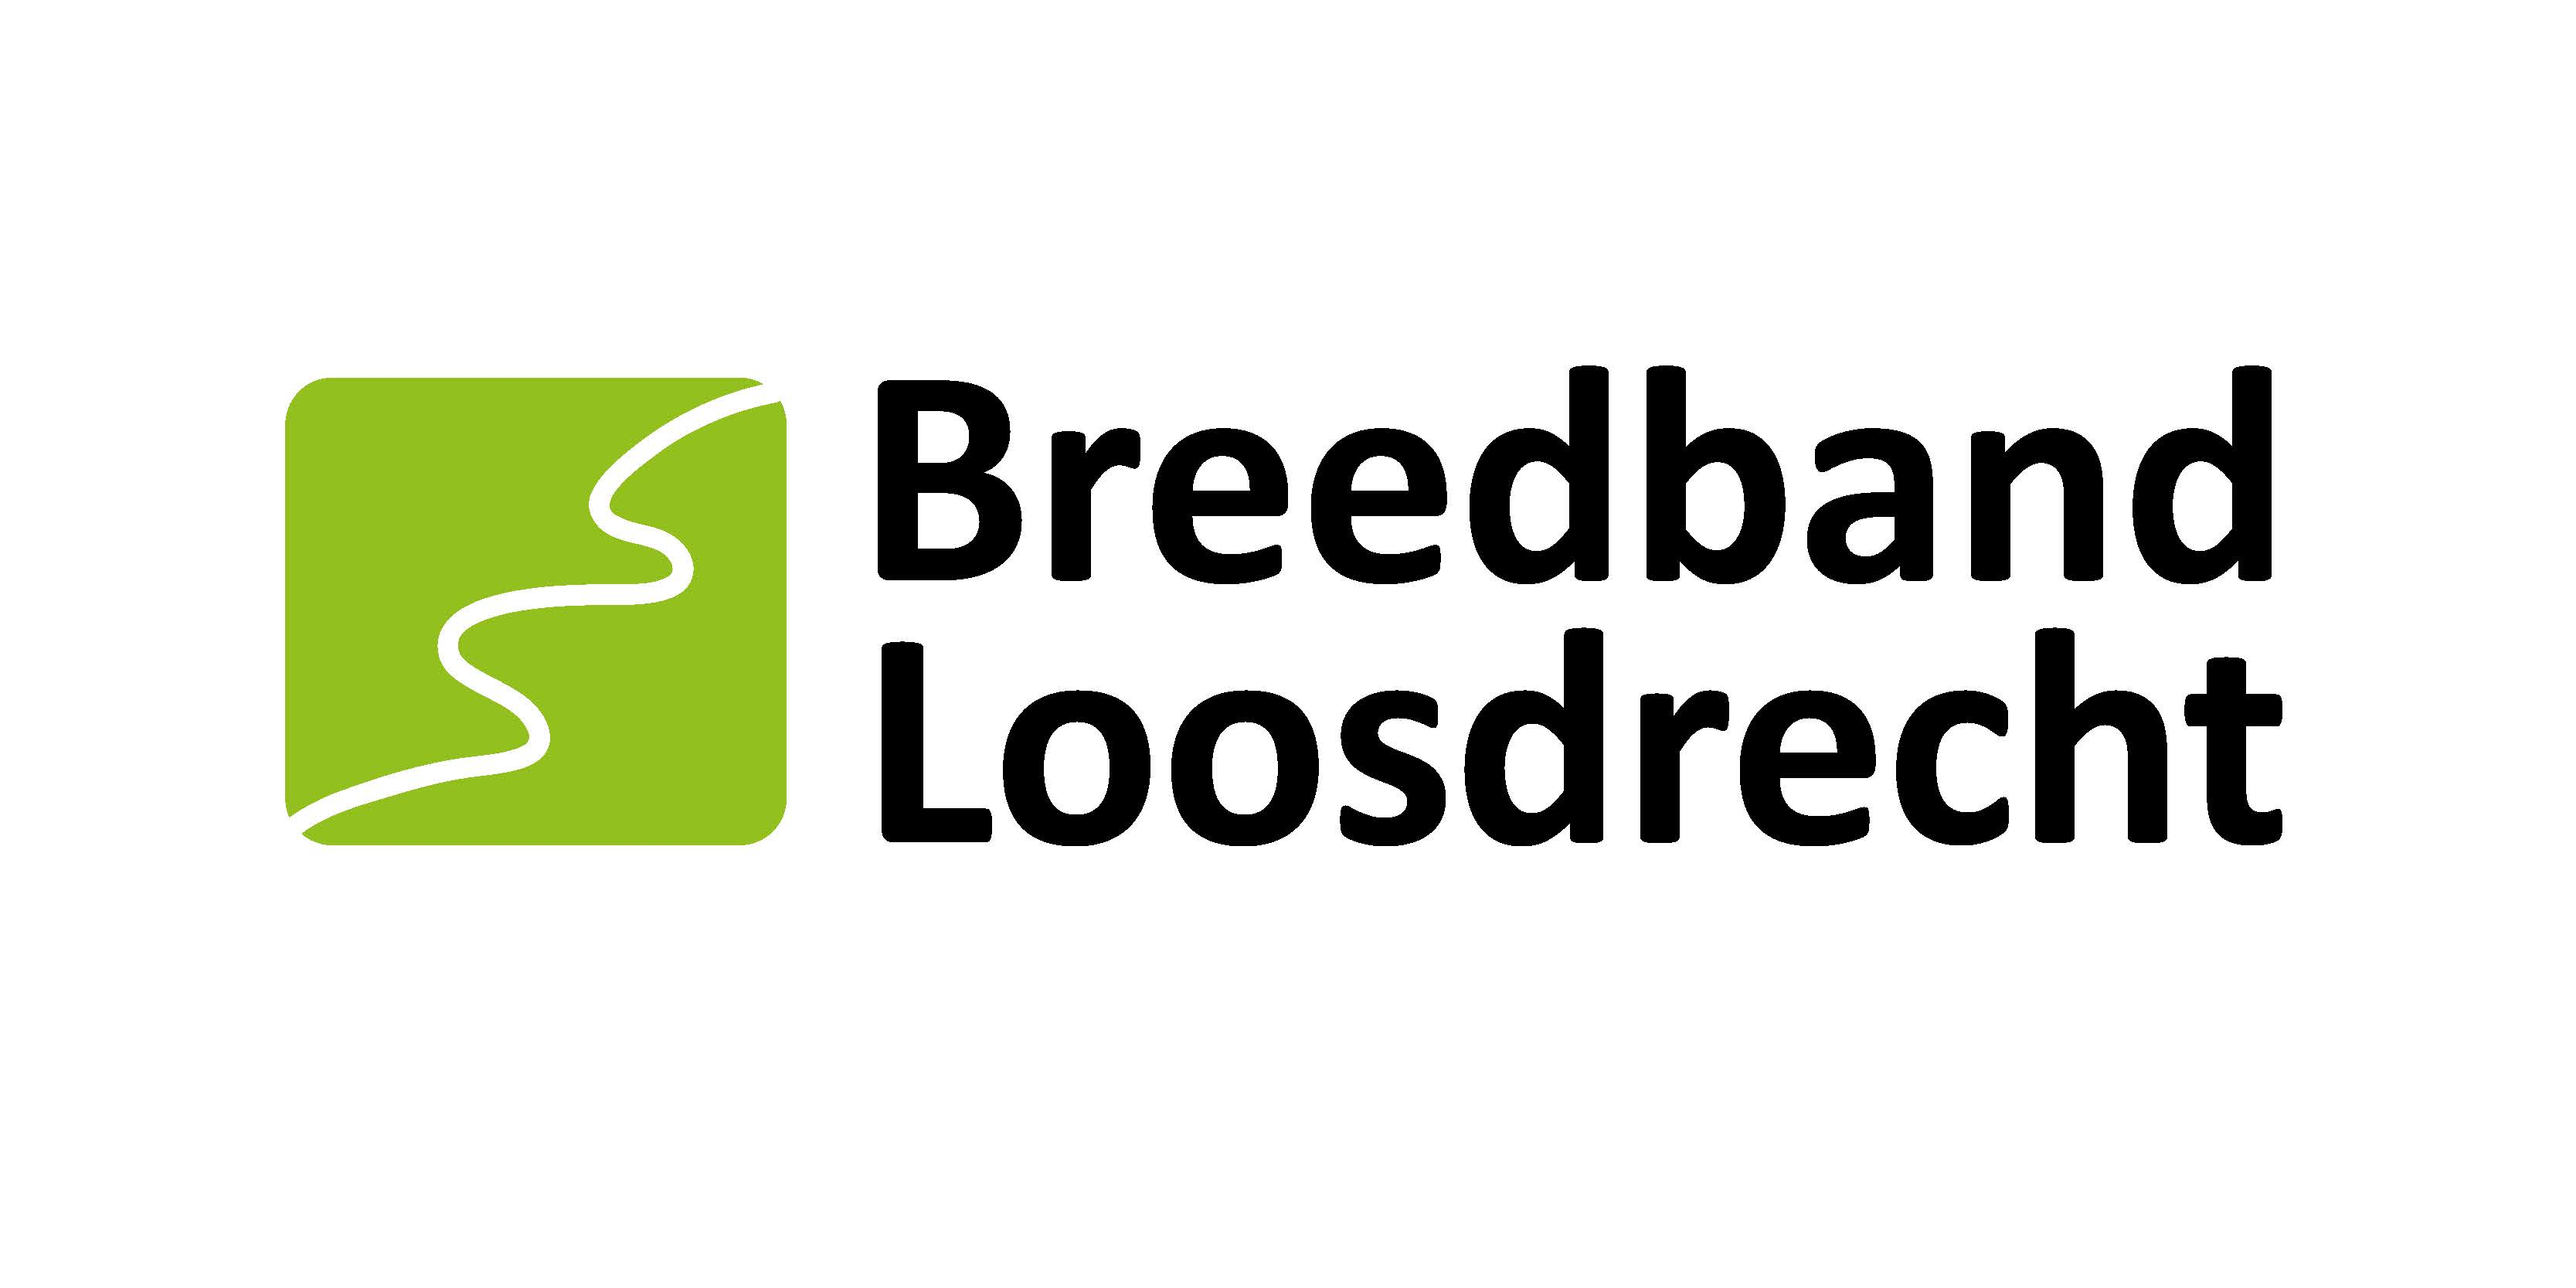 Breedband Loosdrecht logo